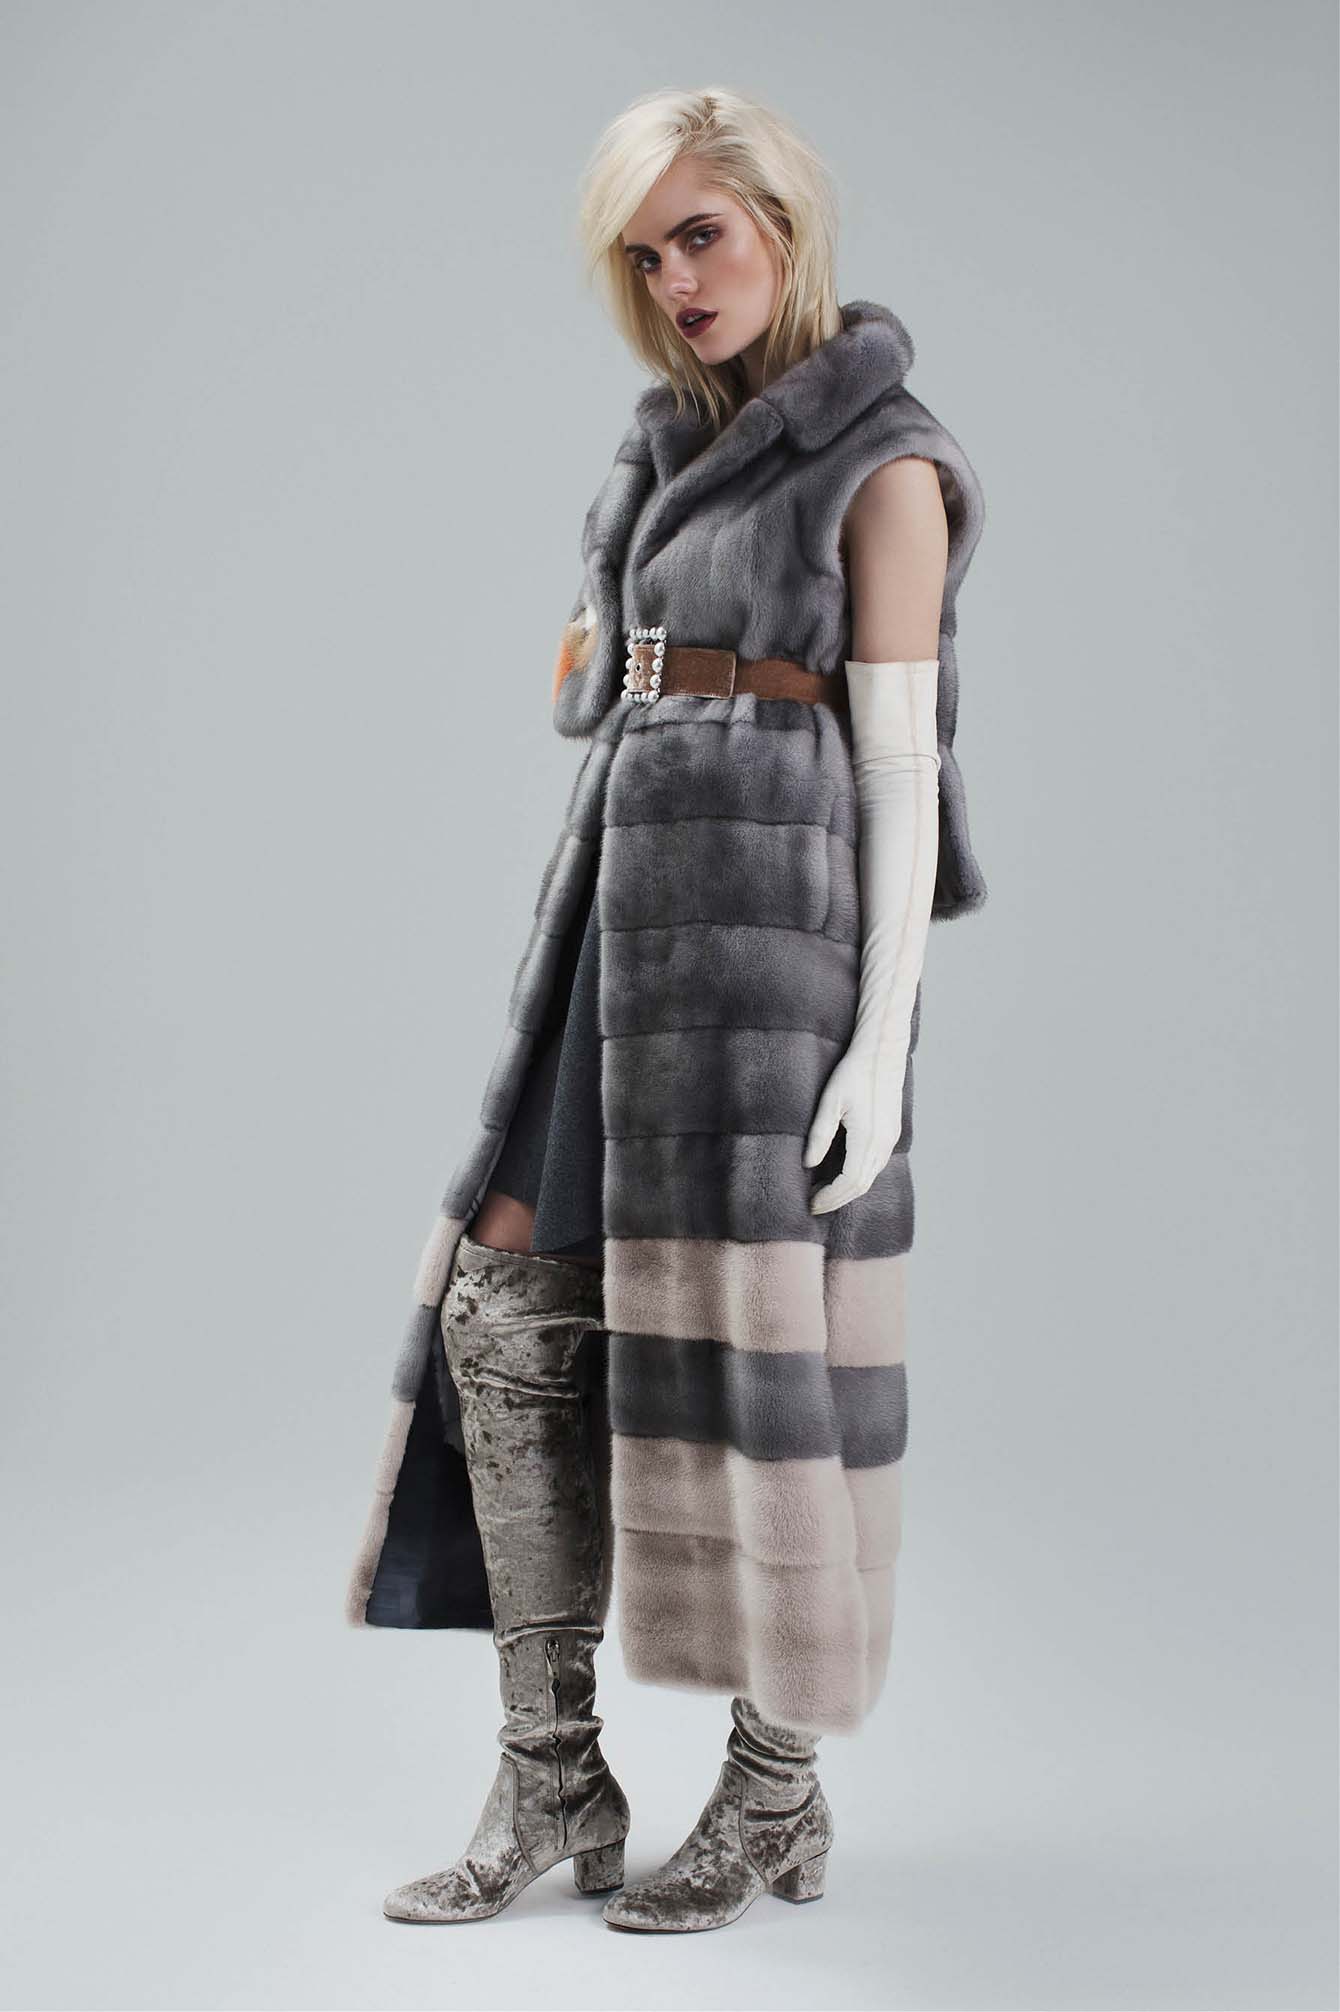 Fur vest | by Italian producer Paolo Moretti